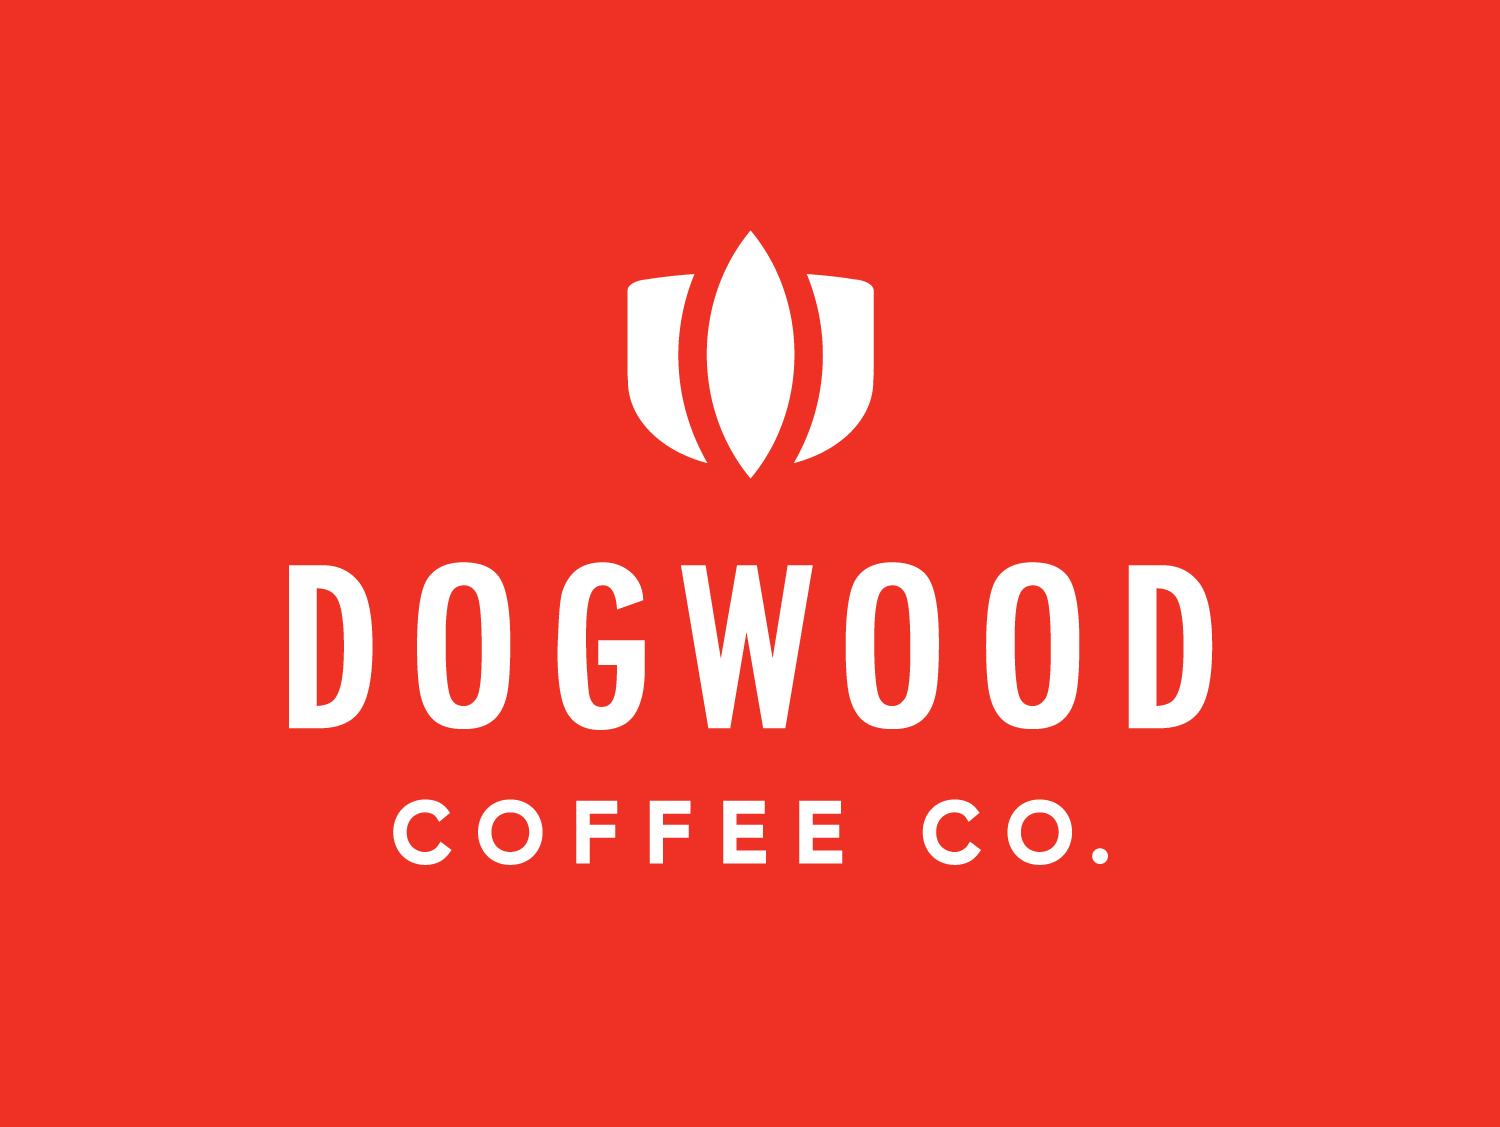 Dogwood-Coffee-Co-logo-02.jpg